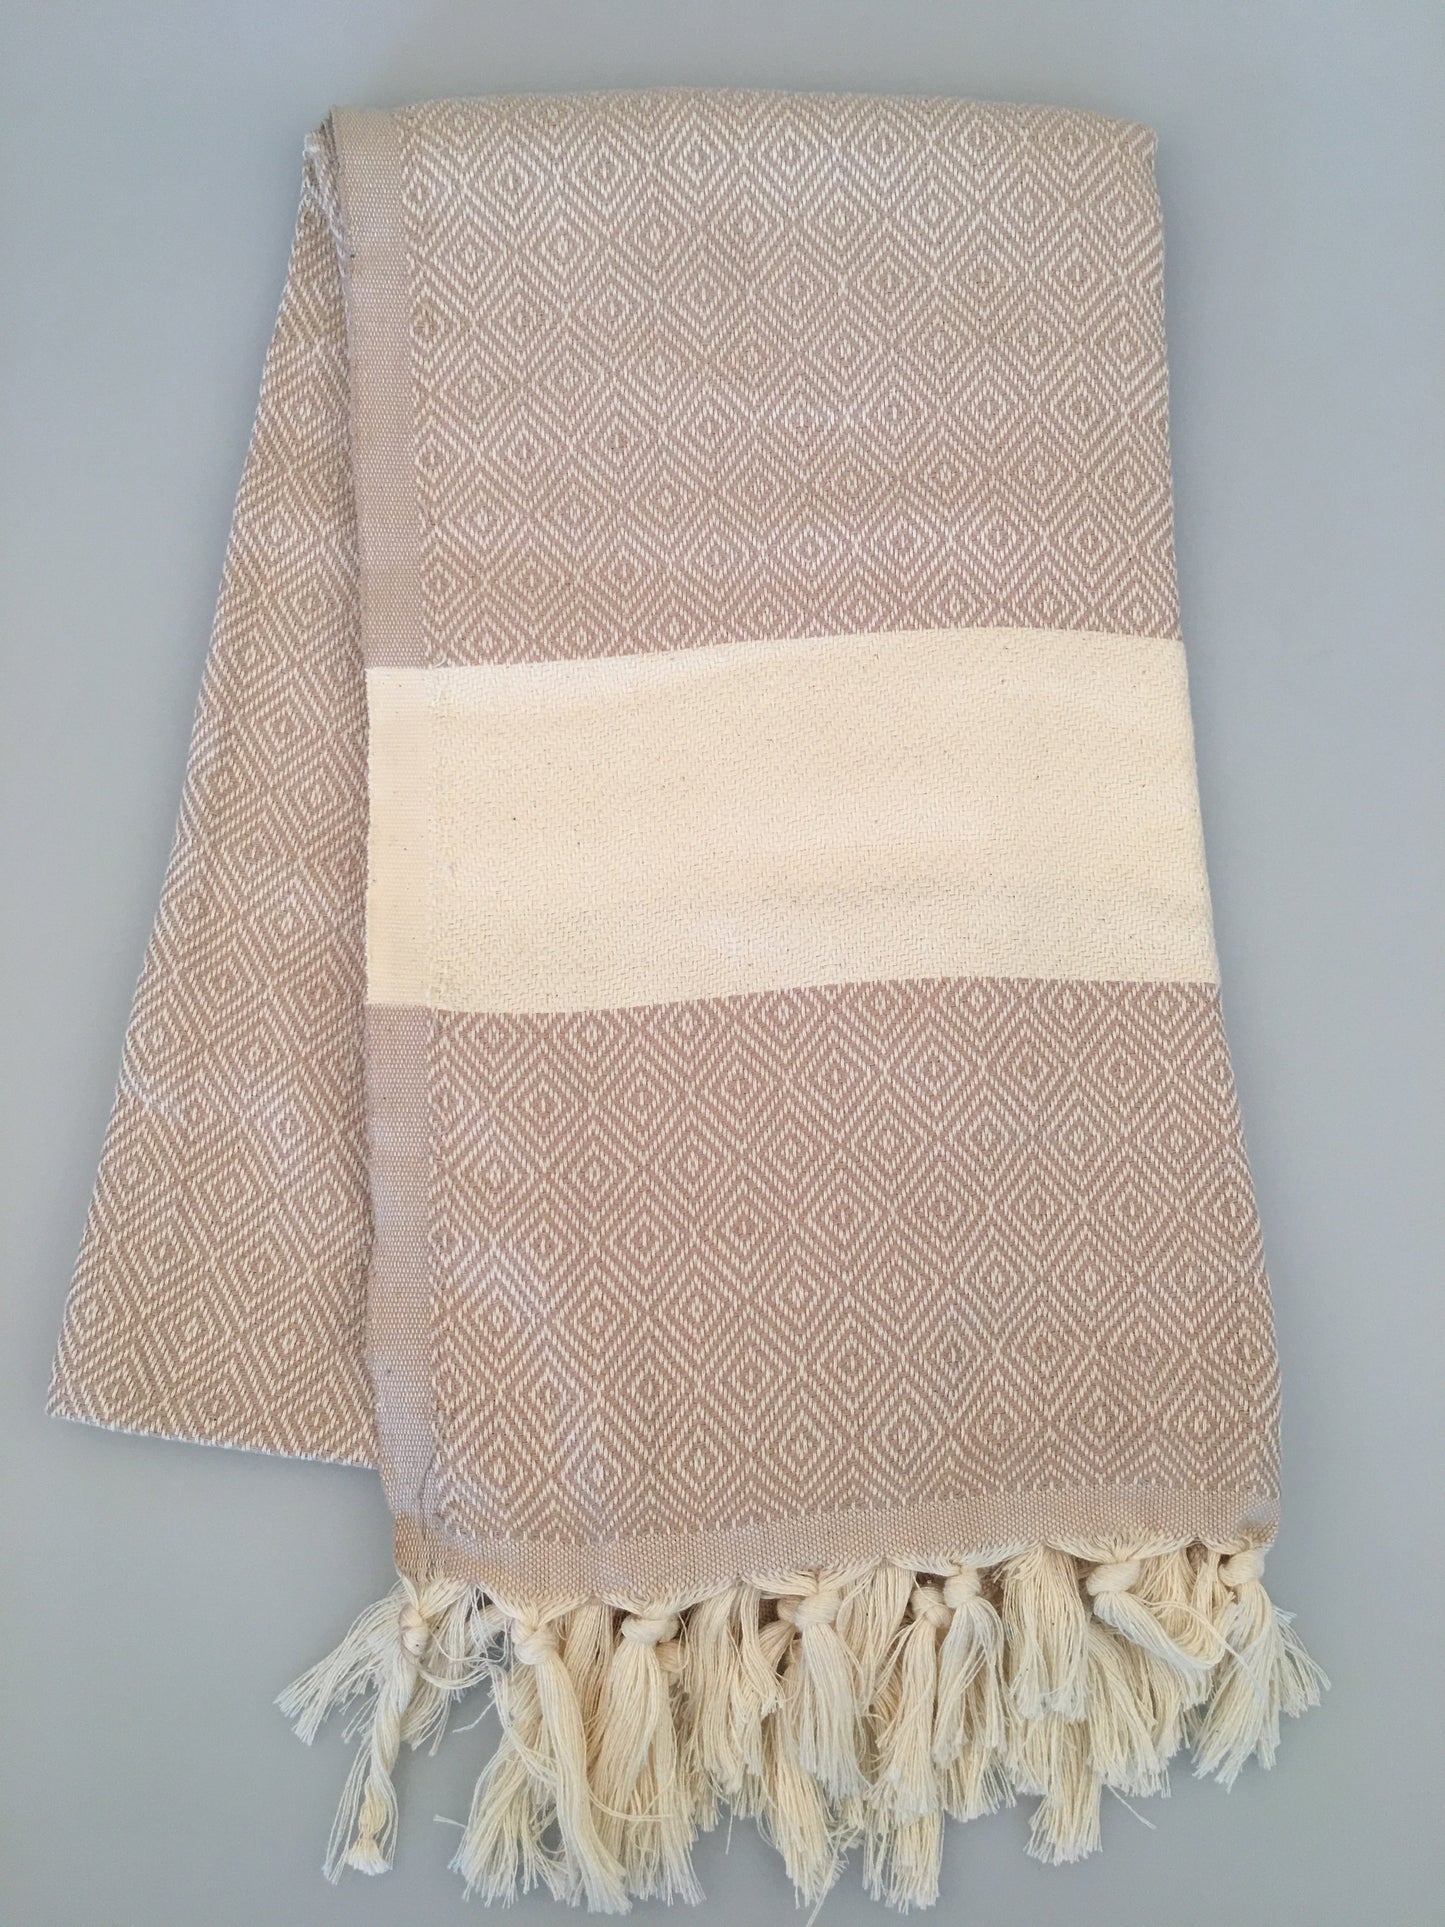 200pcs/LOT Lycia Myra Turkish Towel Beach Peshtemal (380g) - Prewashed - Wholesale Price